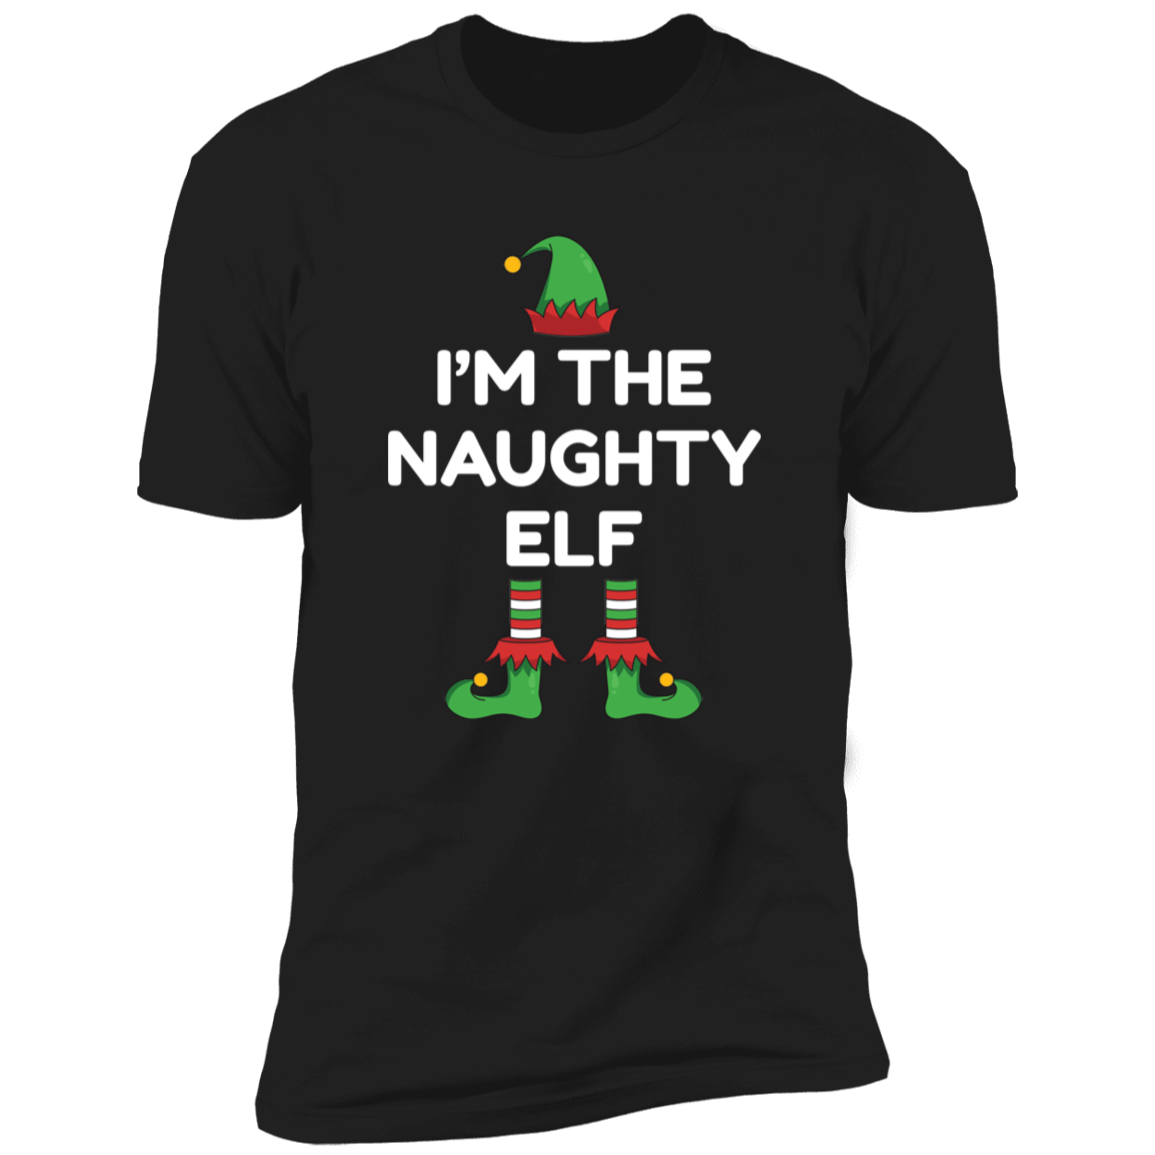 I'm the naughty Elf